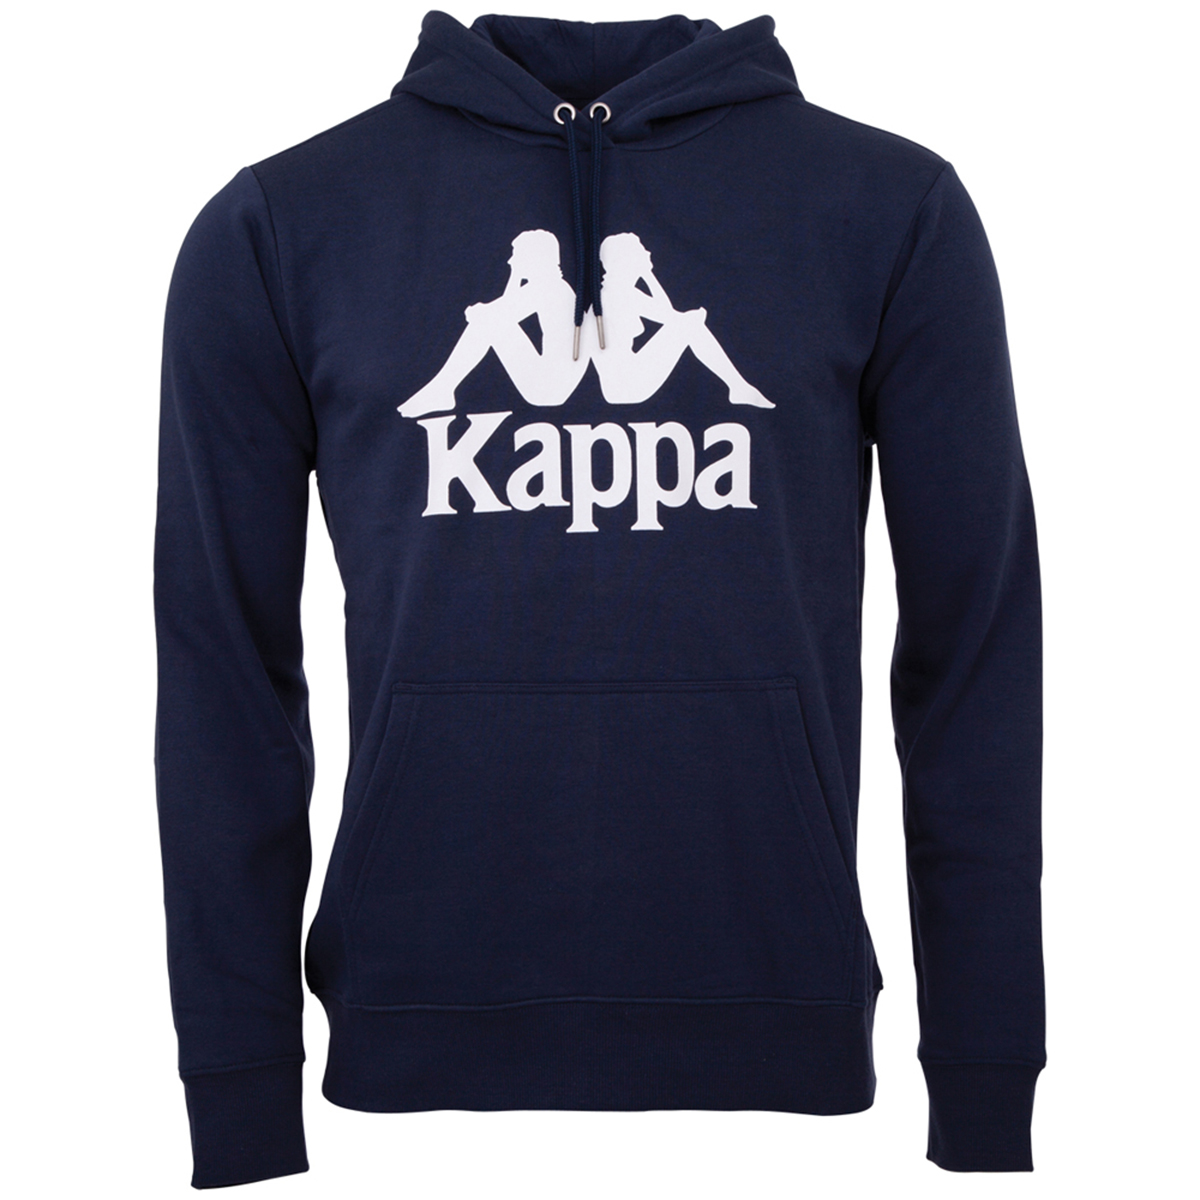 Kappa Unisex Hooded Sweatshirt navy 705322 821 von Kappa